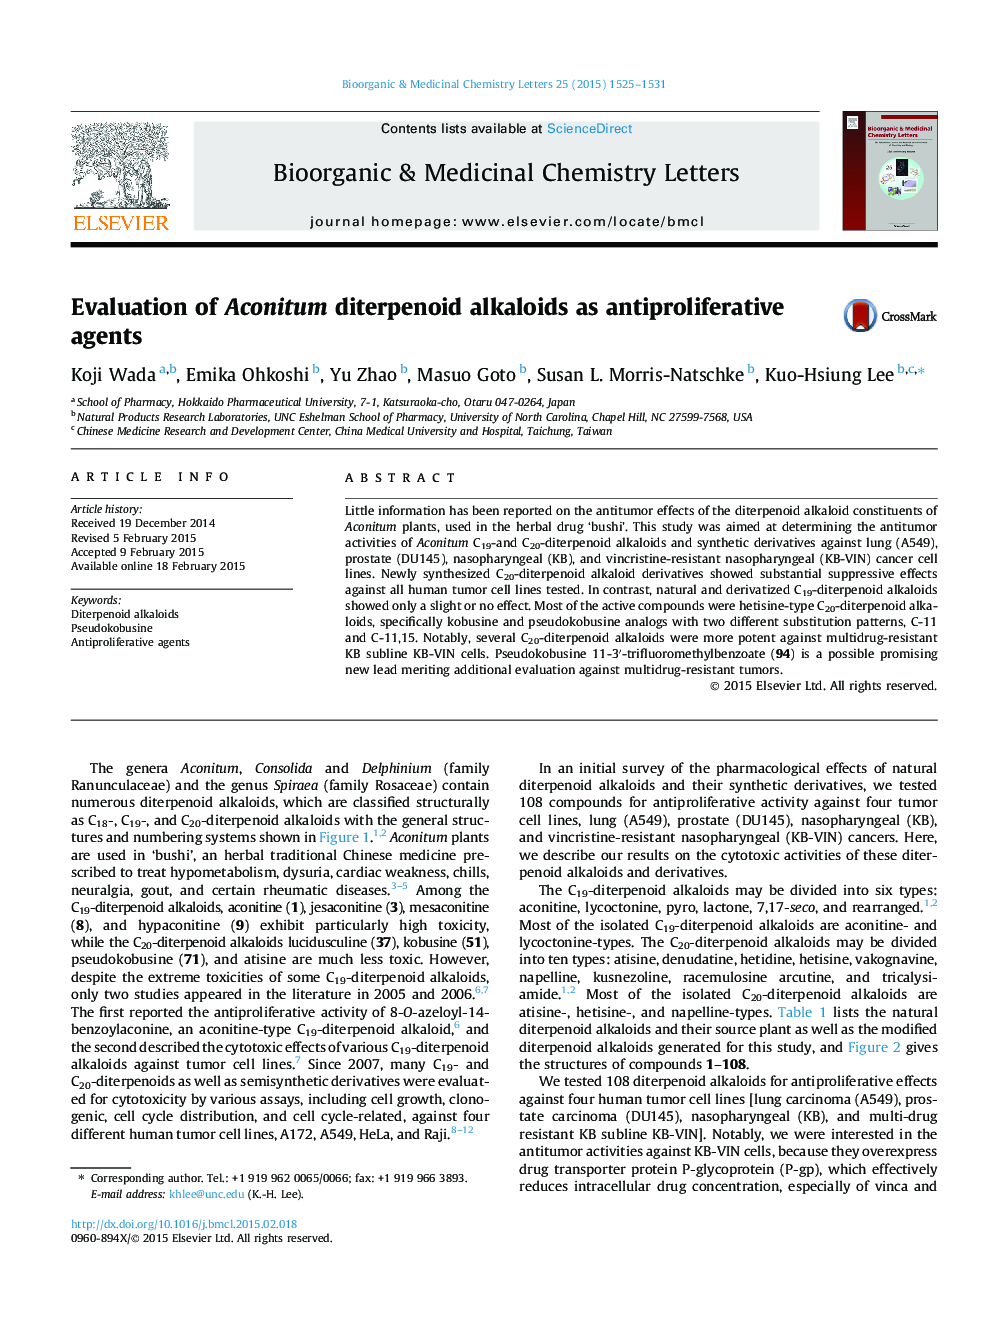 Evaluation of Aconitum diterpenoid alkaloids as antiproliferative agents